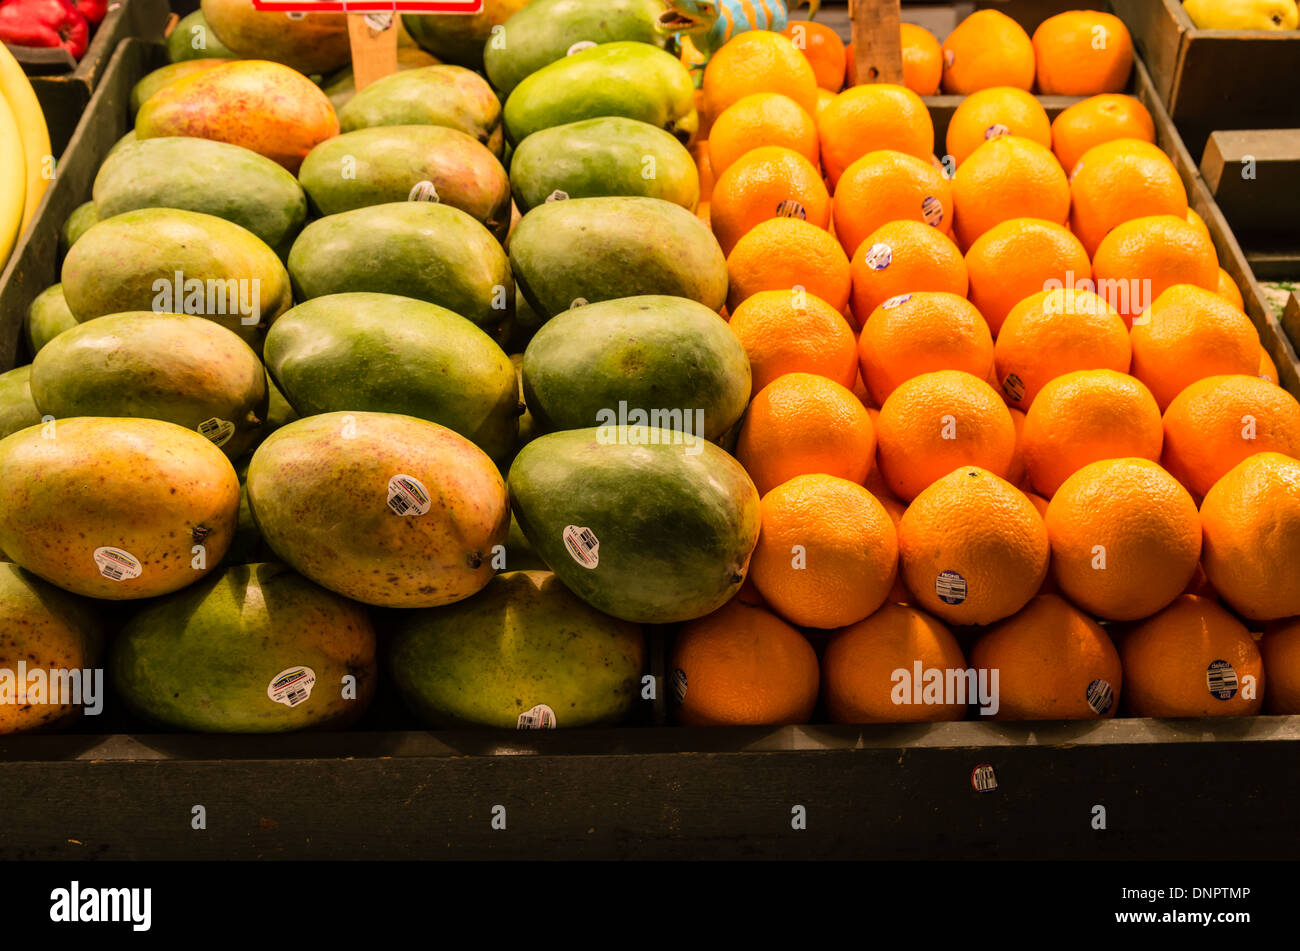 Fresh fruit papaya and oranges on display in a produce vendors stall Pike Place Market Seattle, Washington, USA Stock Photo